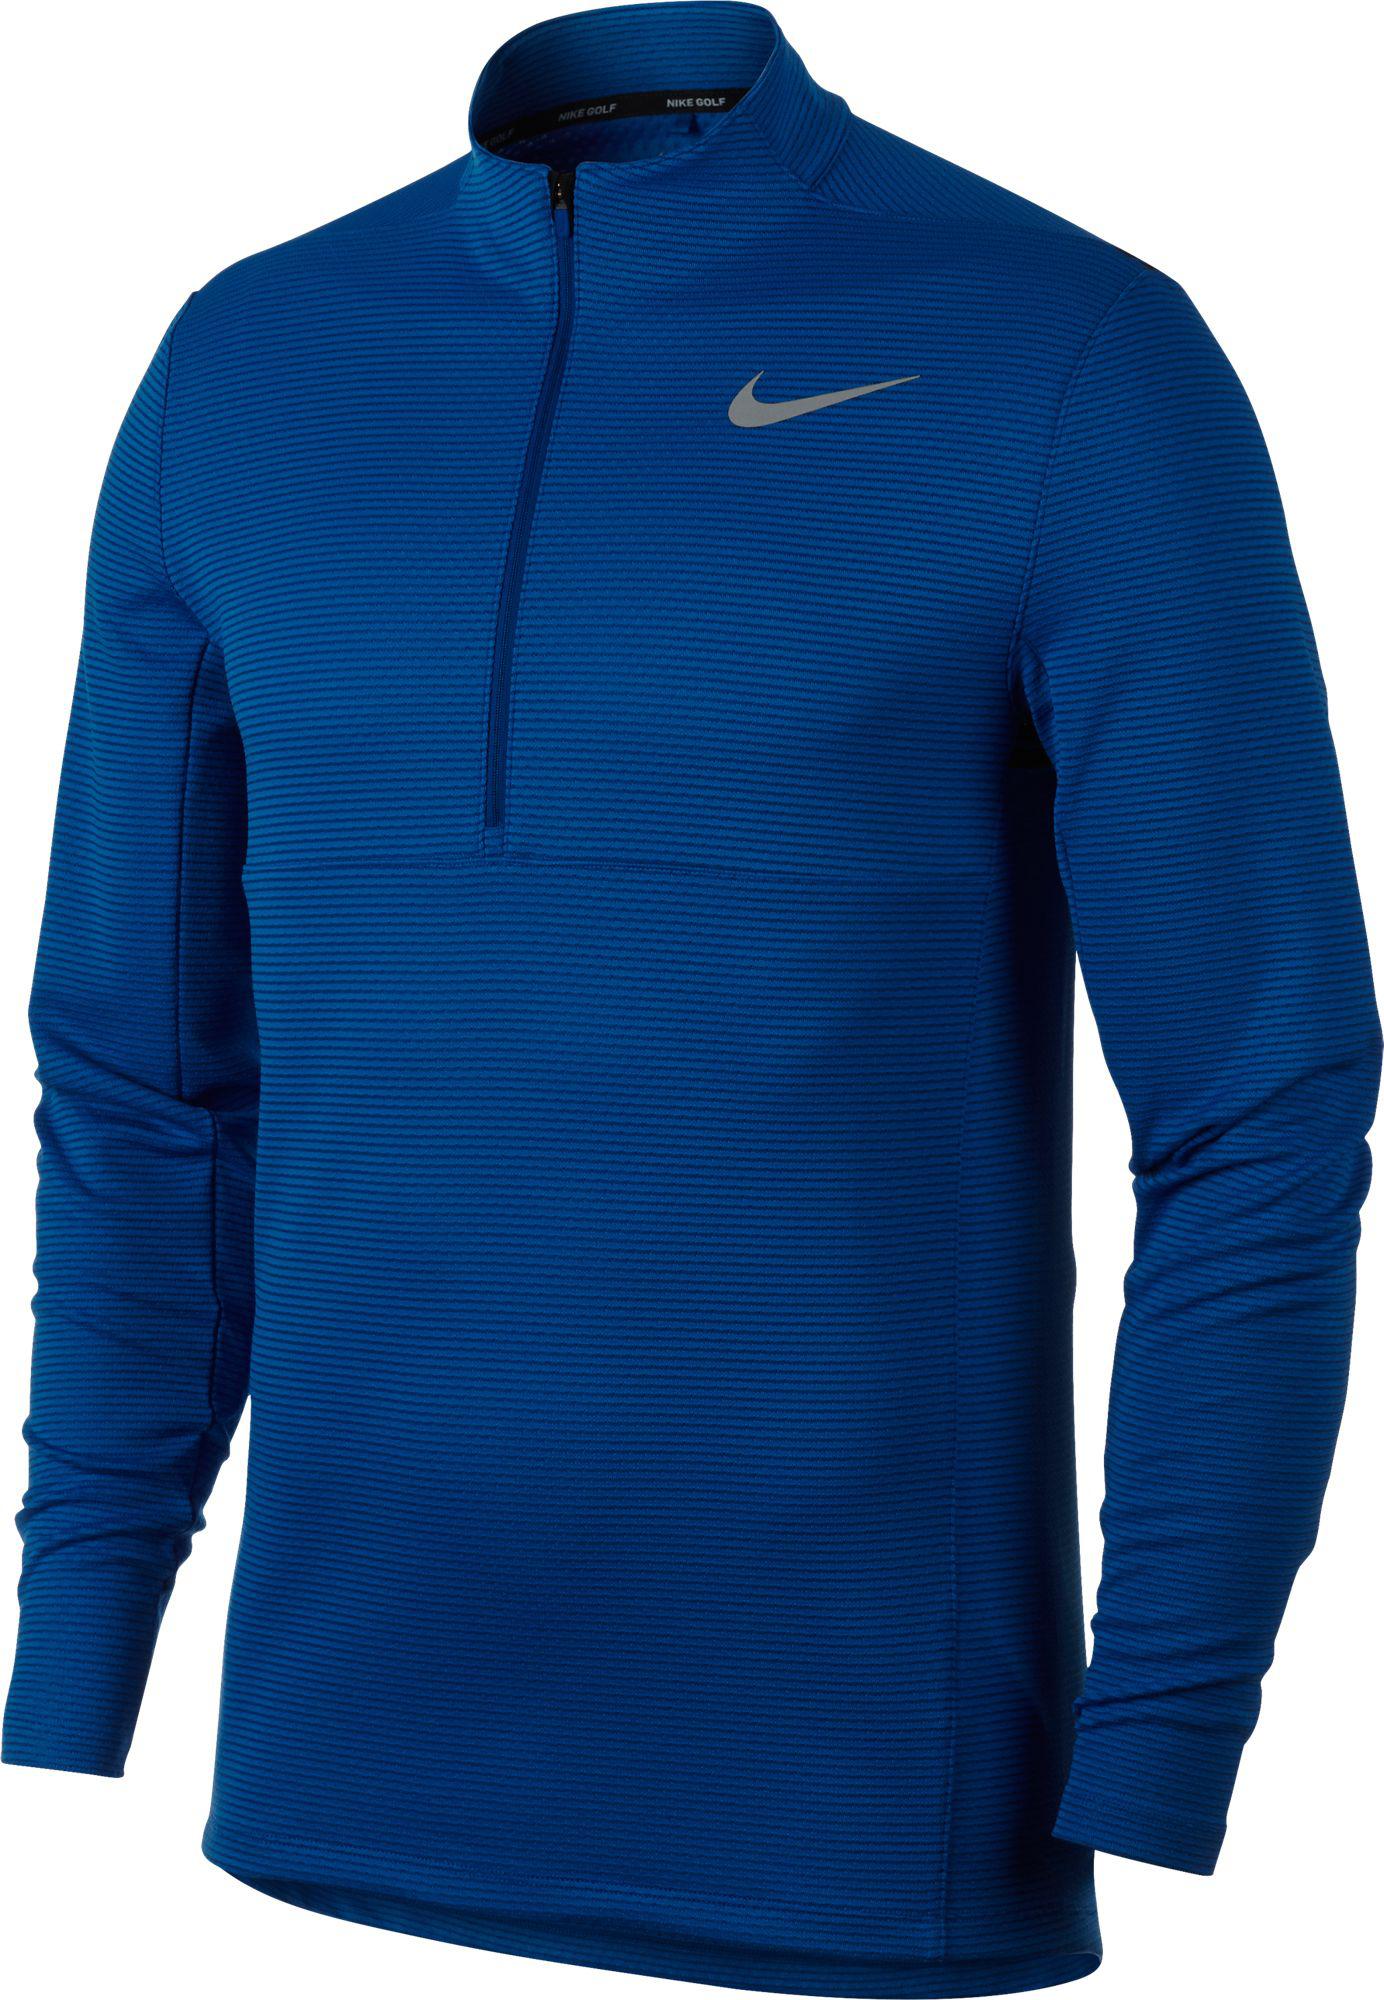 Nike Synthetic Golf Aeroreact 1/2-zip Golf Top in Blue for Men - Lyst